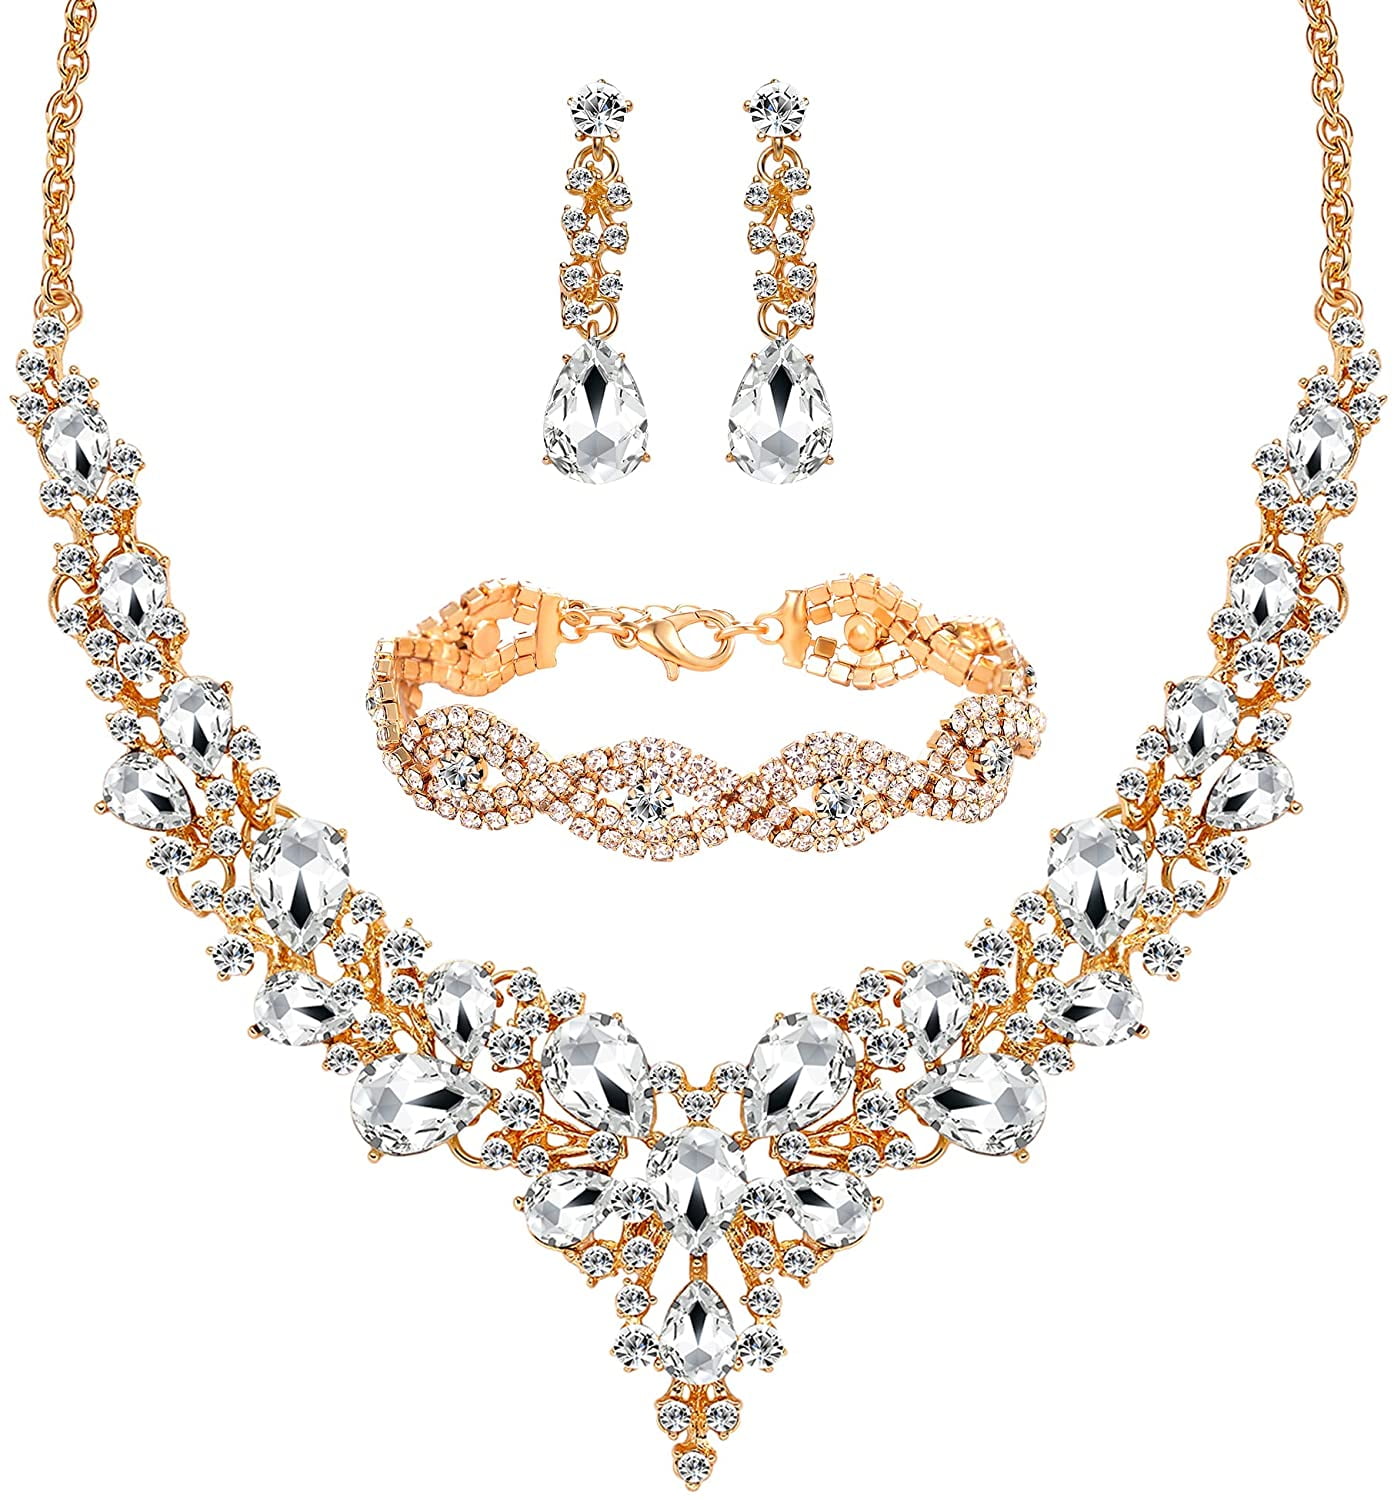  3 Pack Rhinestone Crystal Choker Necklace Link Bracelet  Teardrop Dangle Earrings Jewelry Sets for Women Girls Wedding Party:  Clothing, Shoes & Jewelry